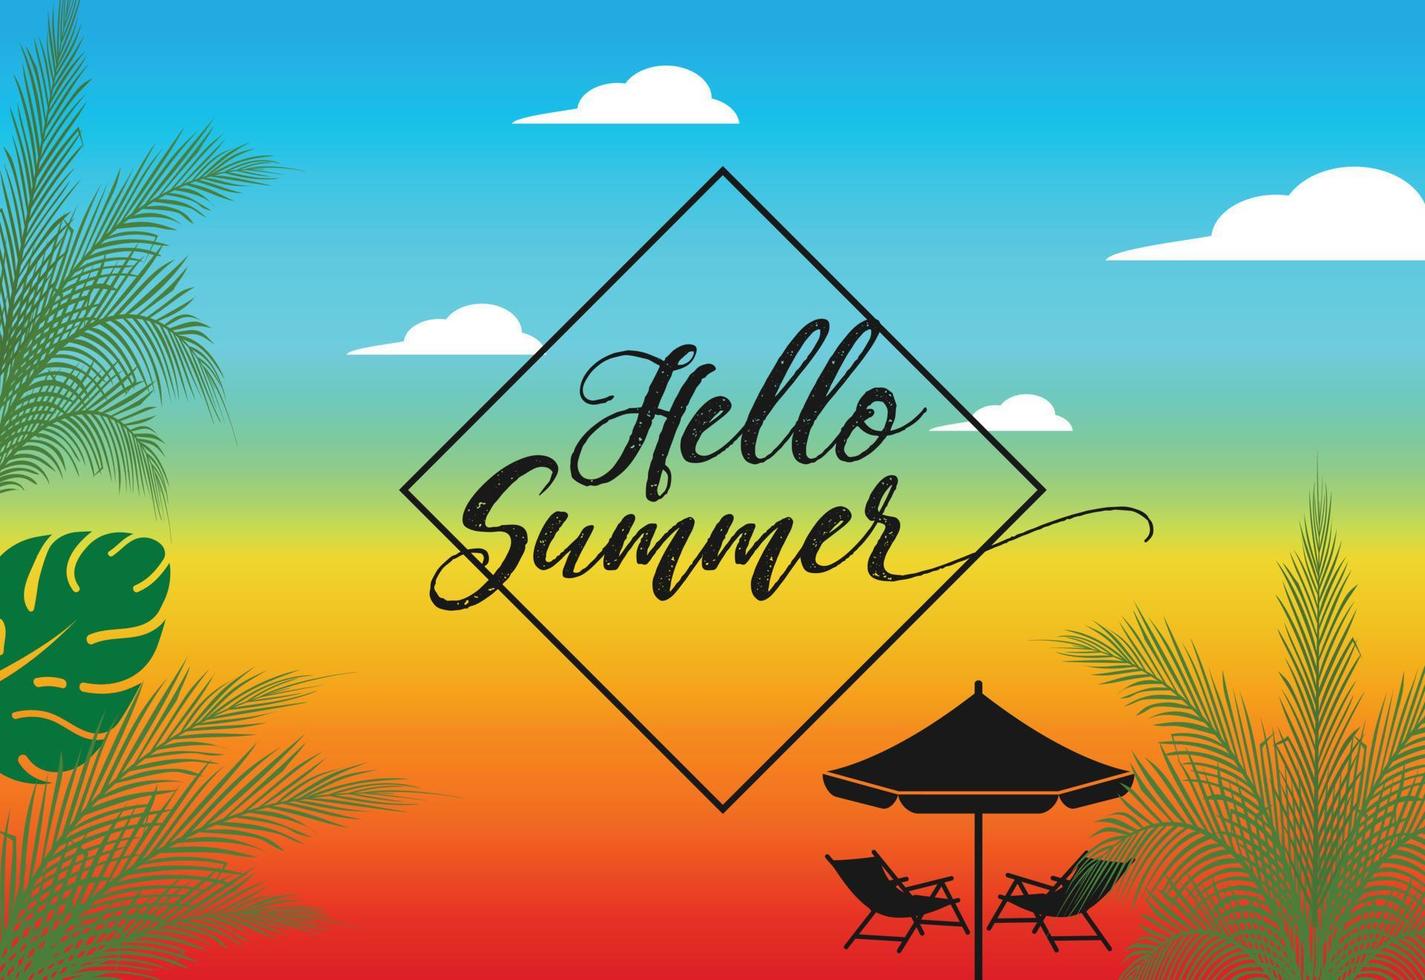 Summer holidays design concept vector illustration. Tropical beach scene.